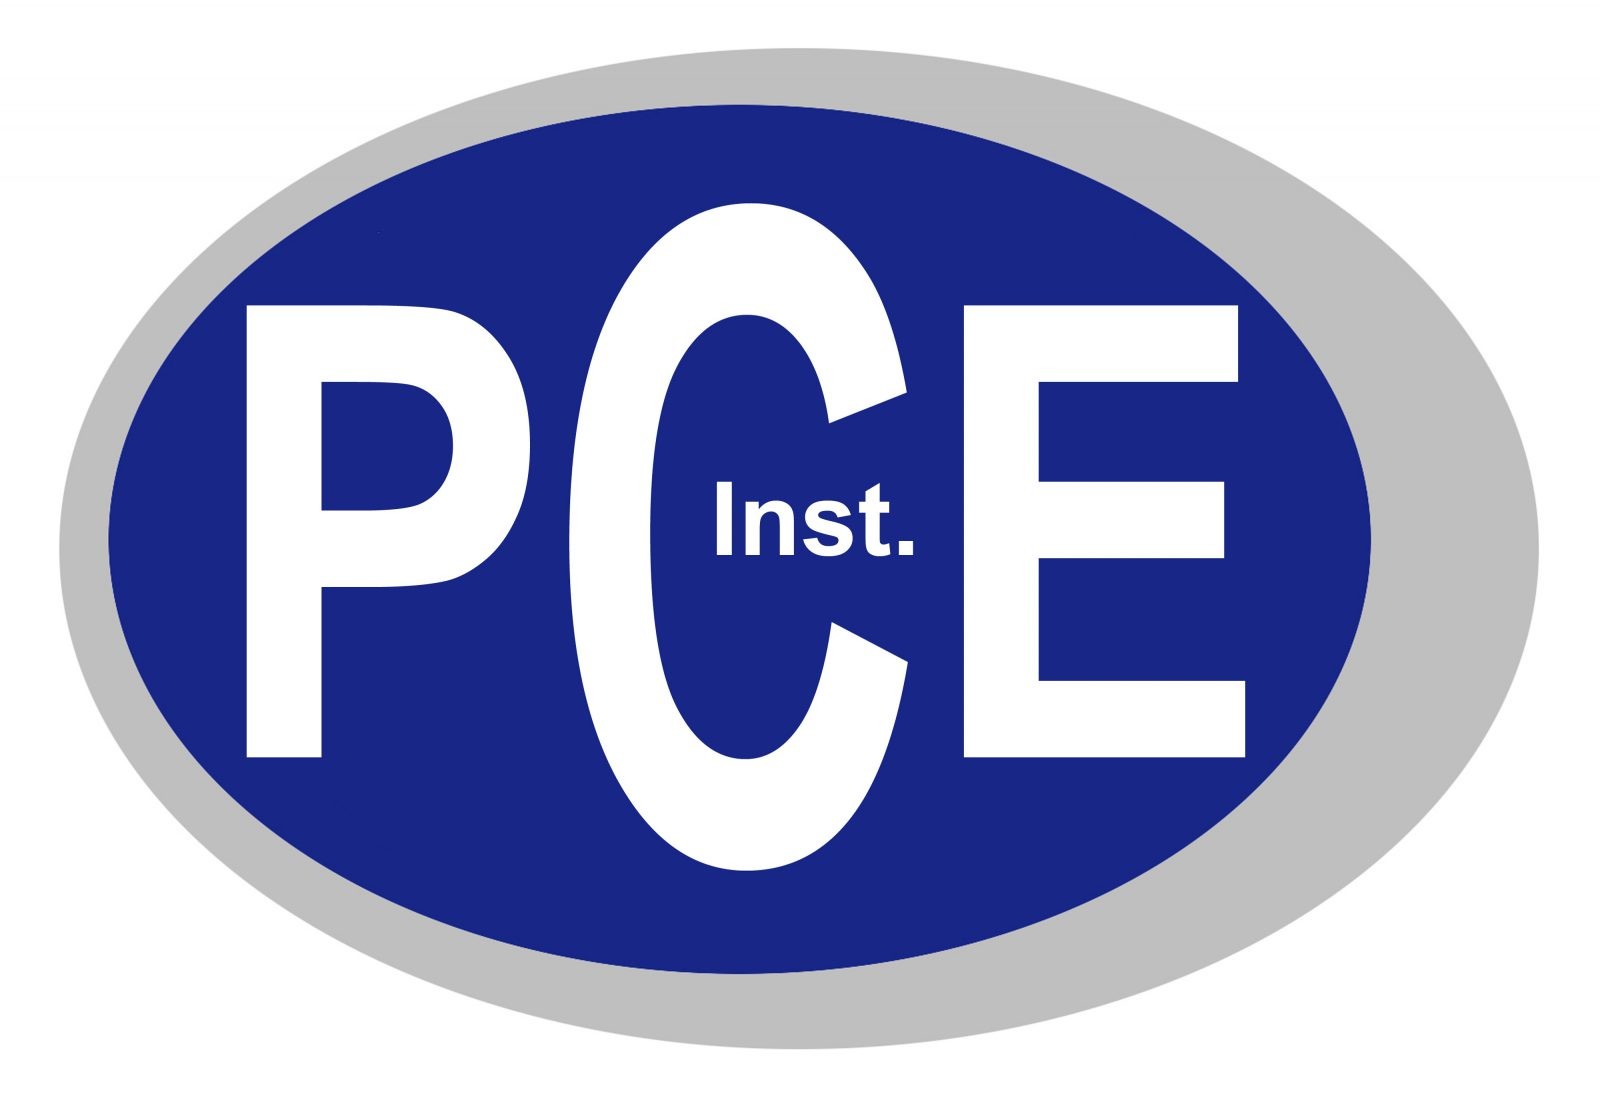 logo PCE